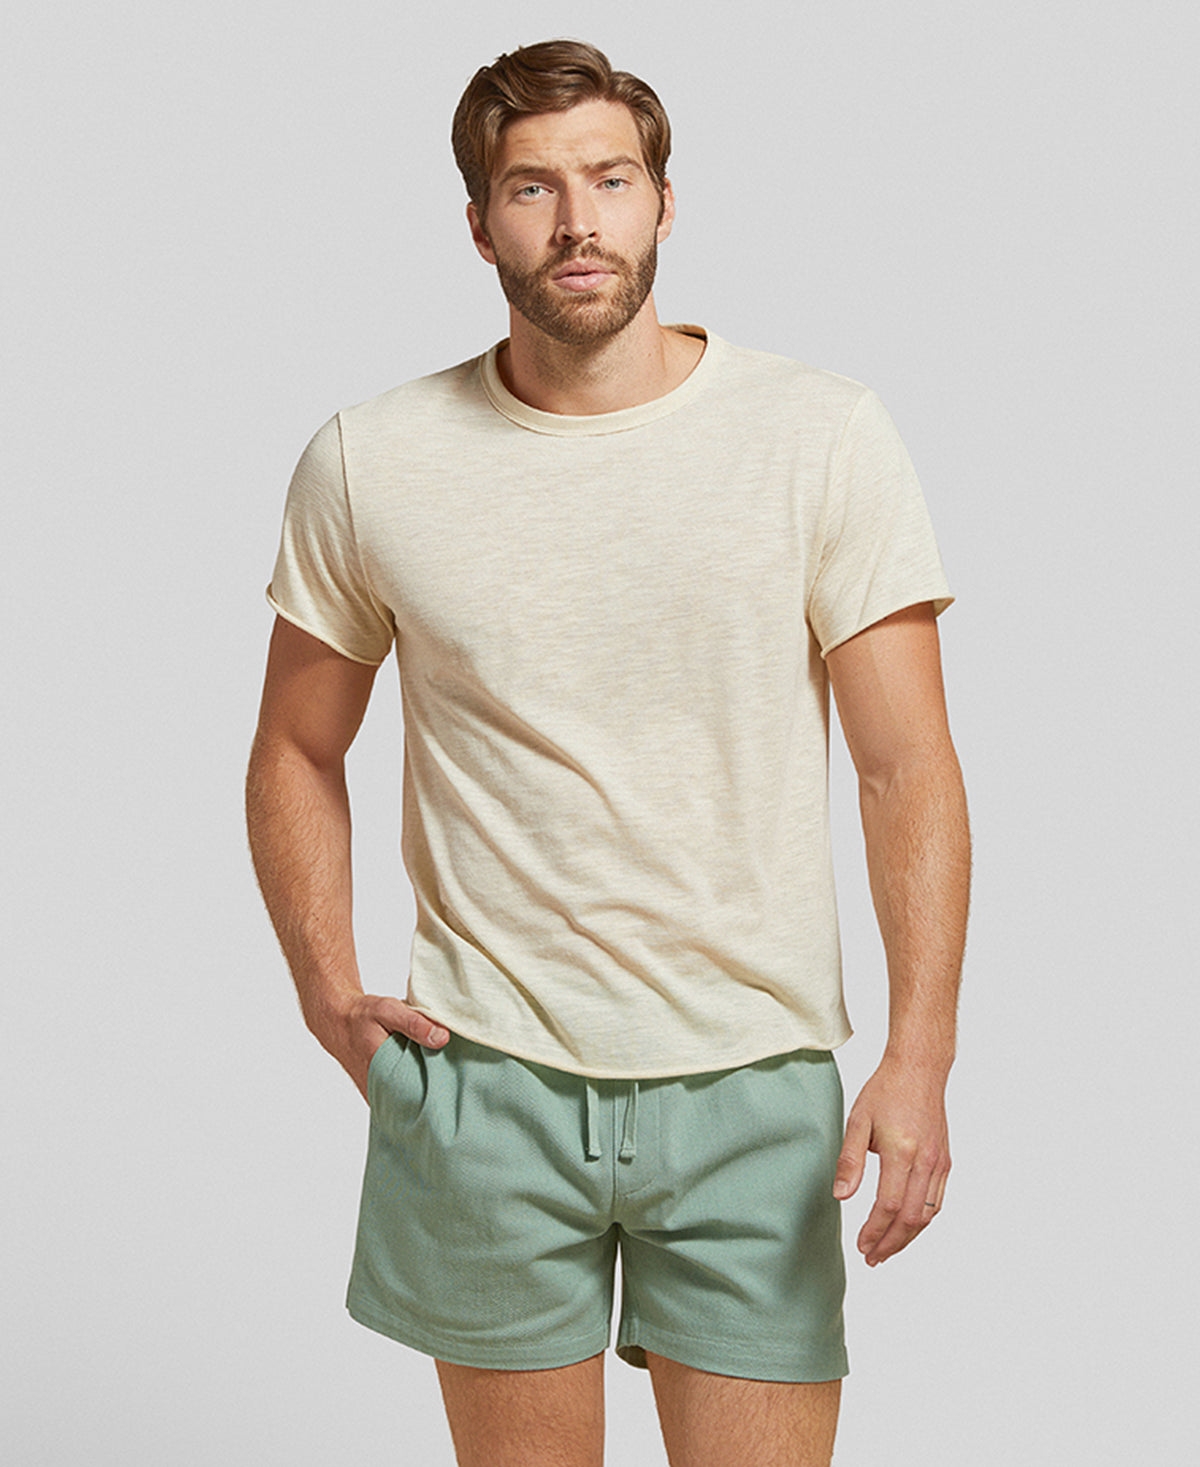 Men's Raw Blend T-Shirt - Blush